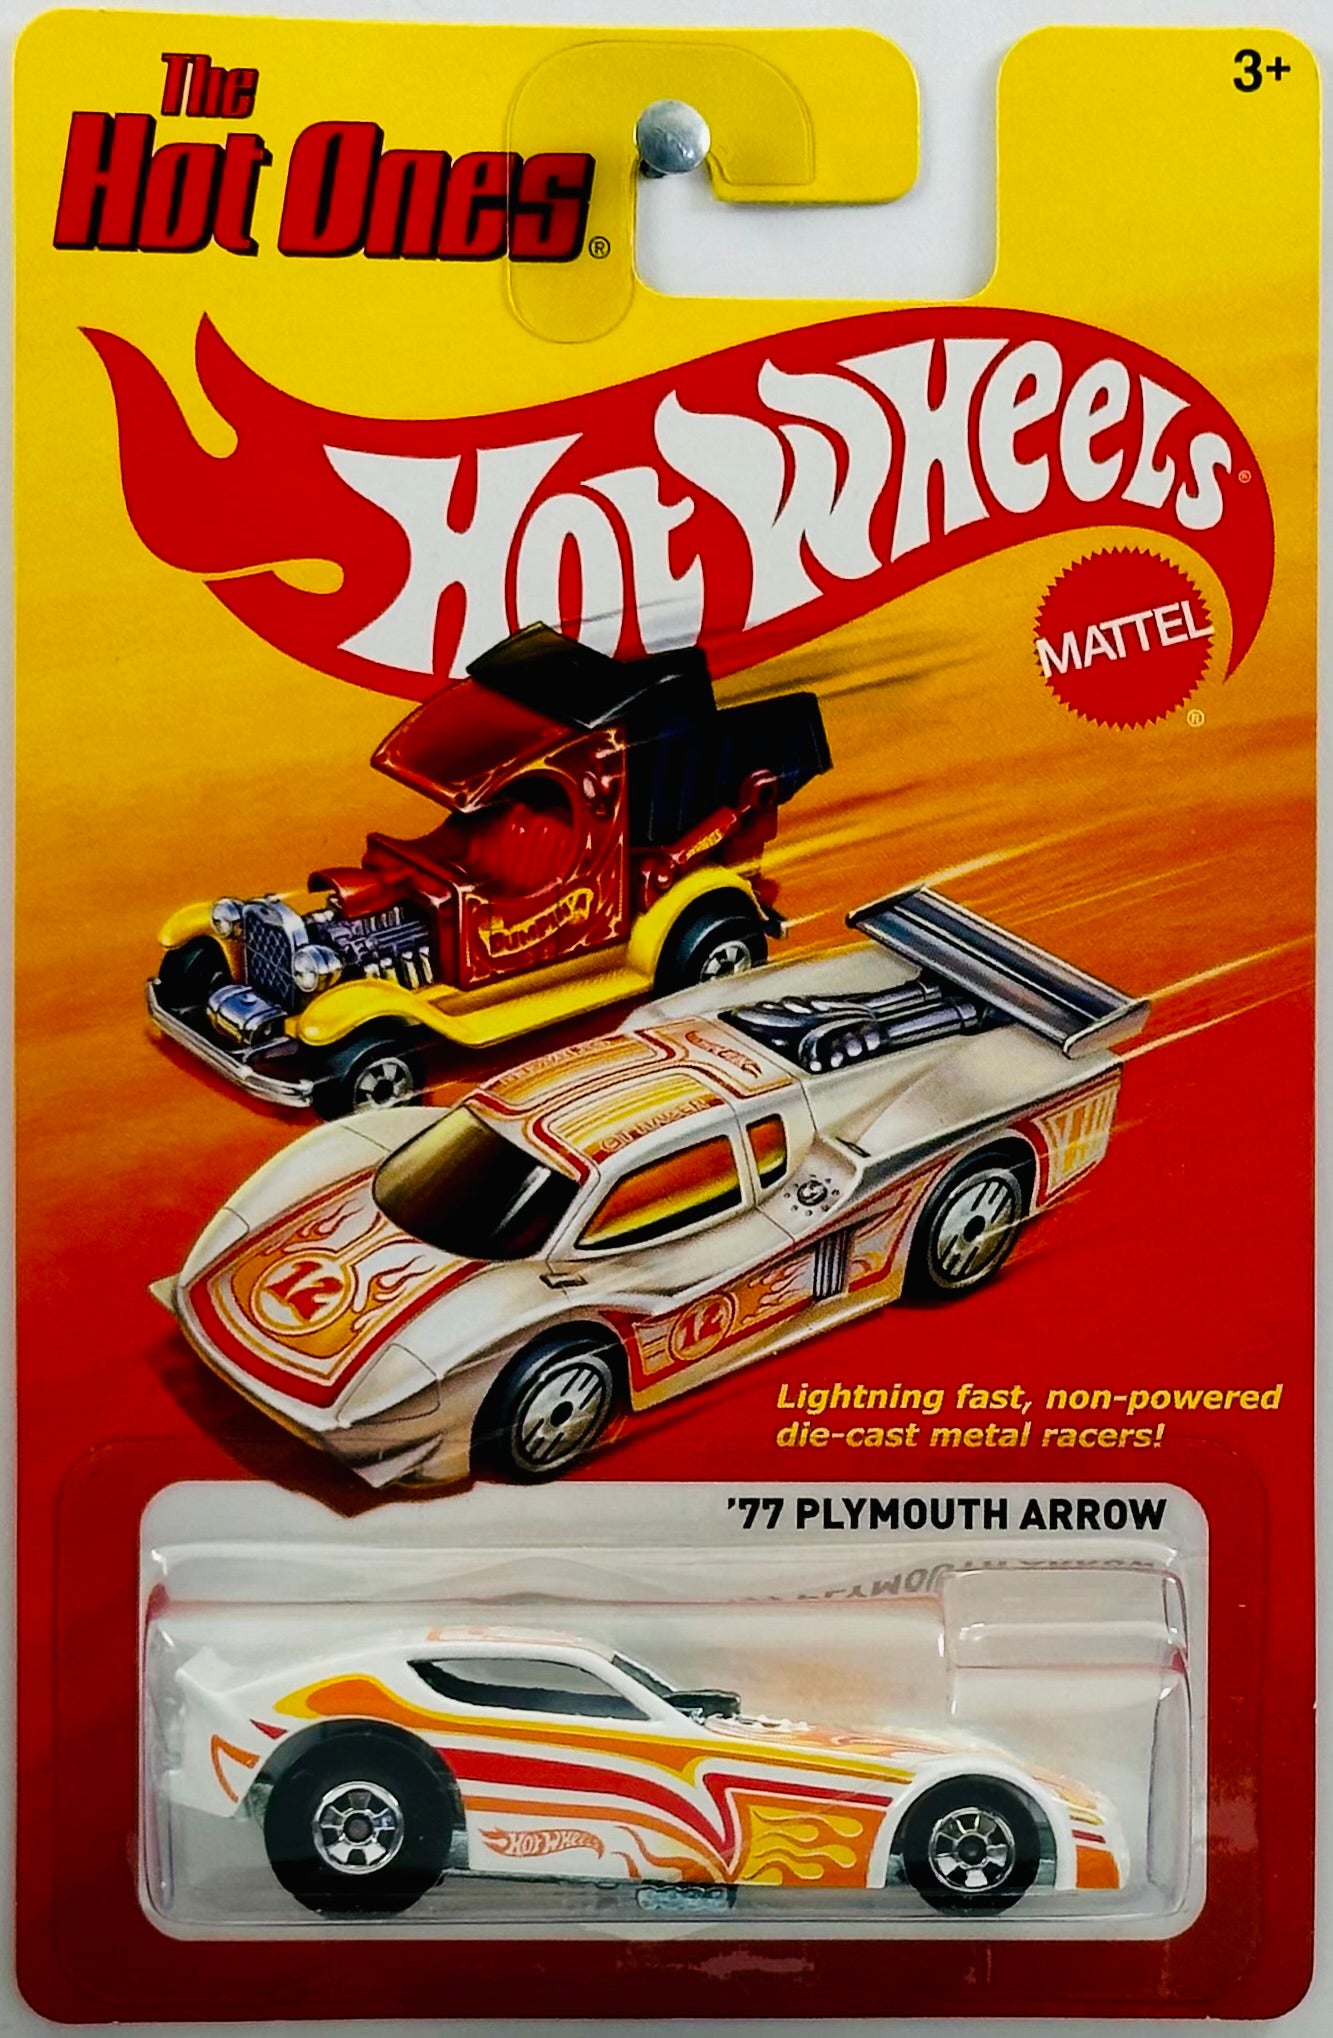 Hot Wheels 2012 - The Hot Ones - '77 Plymouth Arrow - White - Basic Wheels - Metal/Metal - Lightning Fast Metal Racers